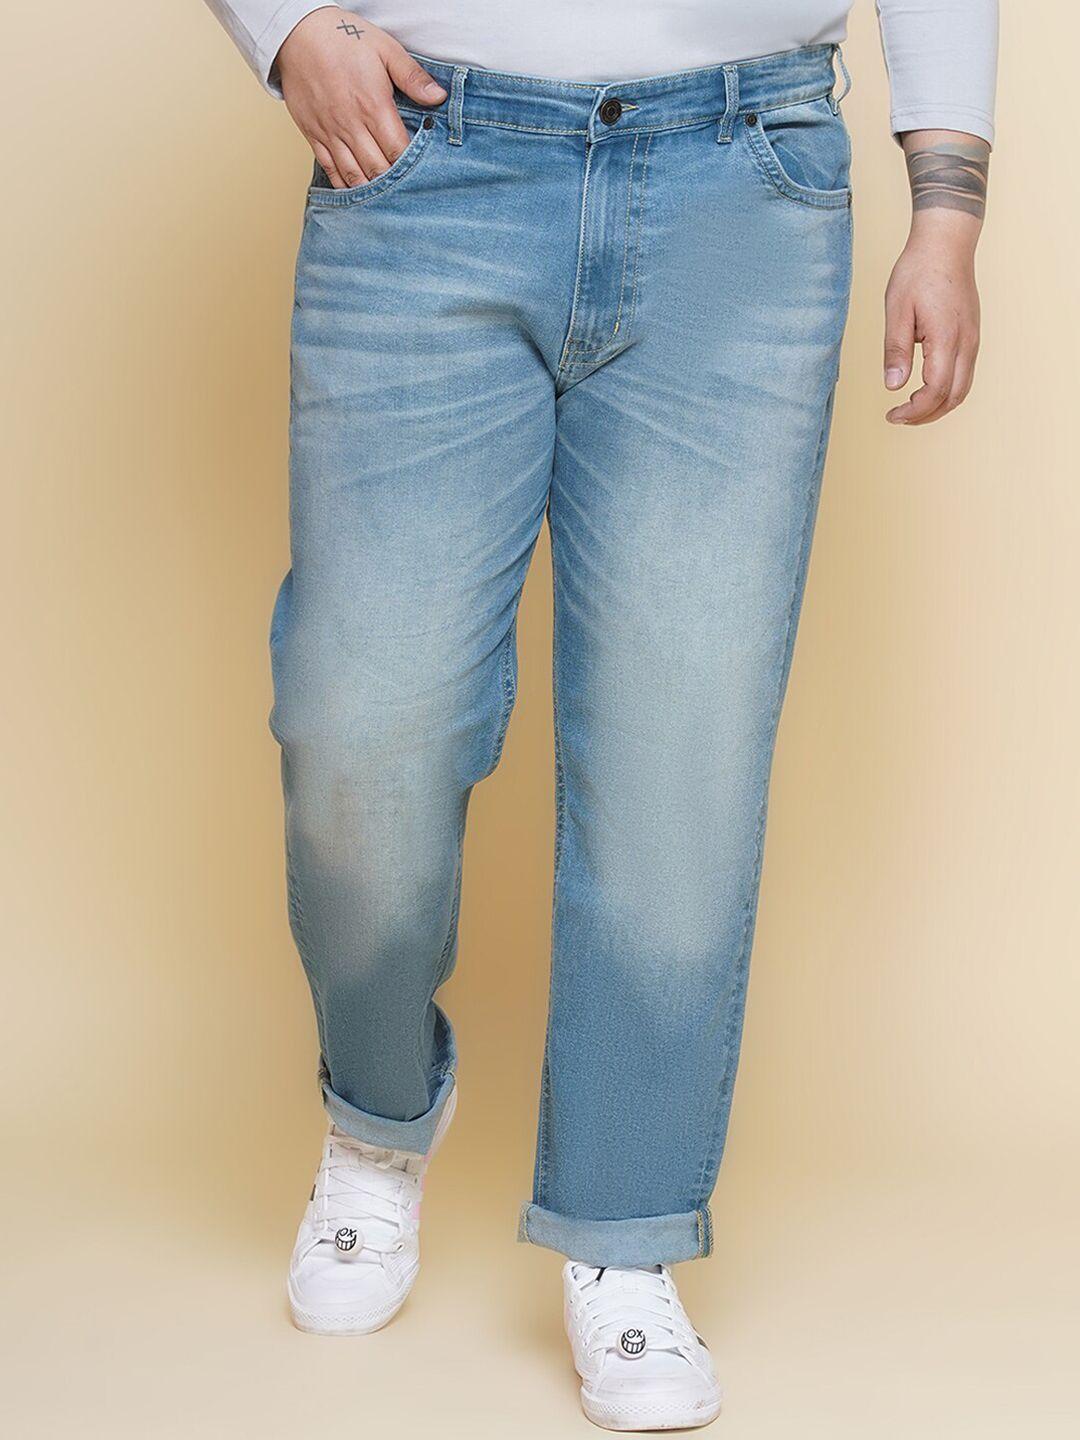 john pride plus size men jean mid-rise light fade clean look stretchable jeans